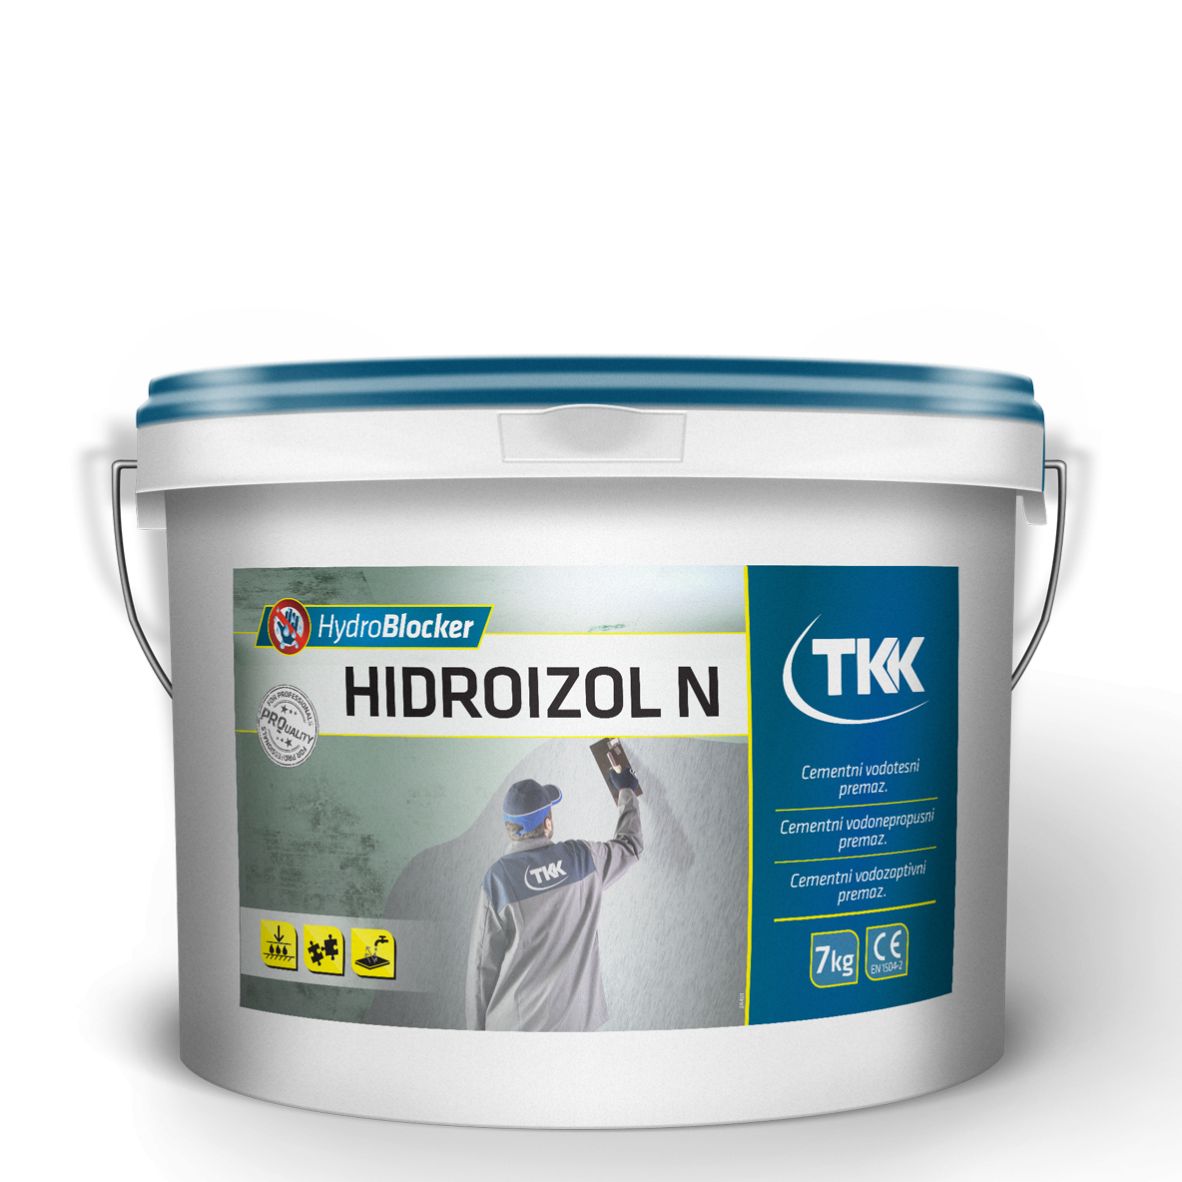 Hydroblocker hidroizol n